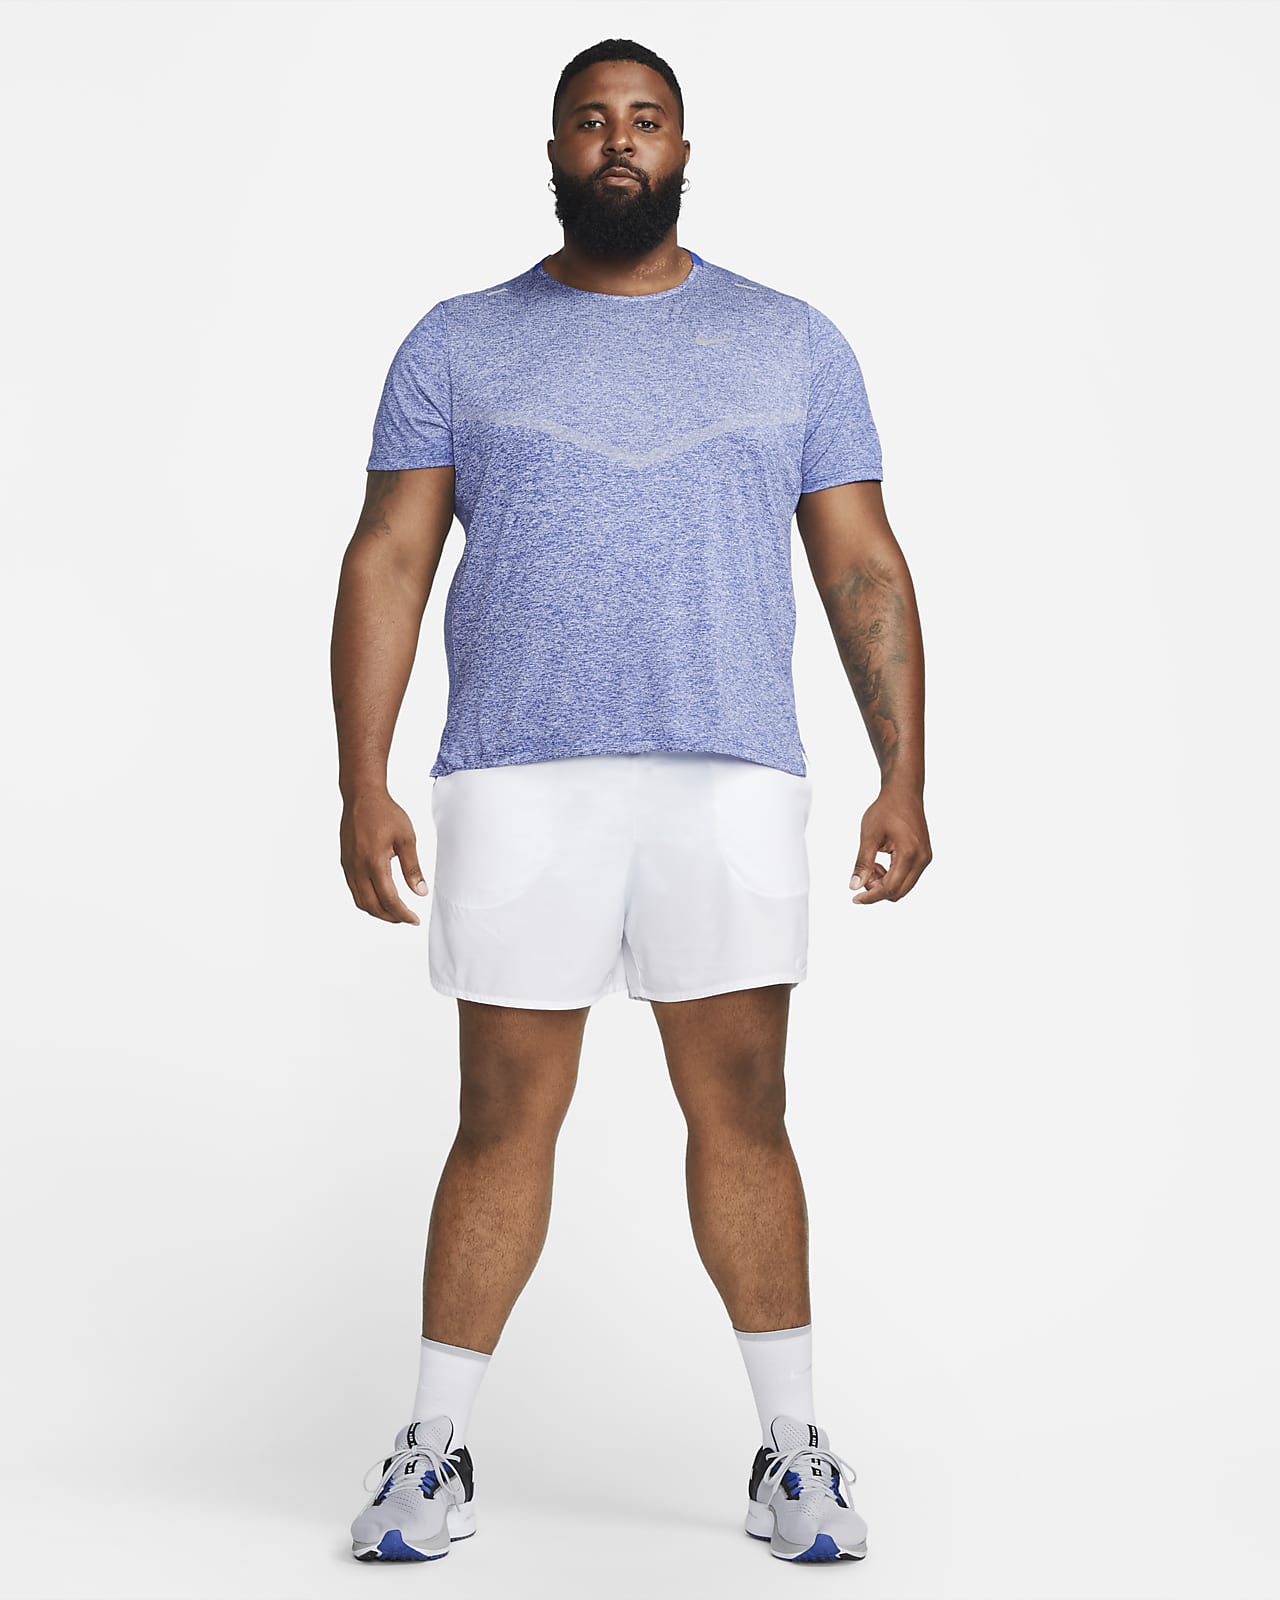 Nike Rise 365 Men's Dri-FIT Short-Sleeve Running Top.